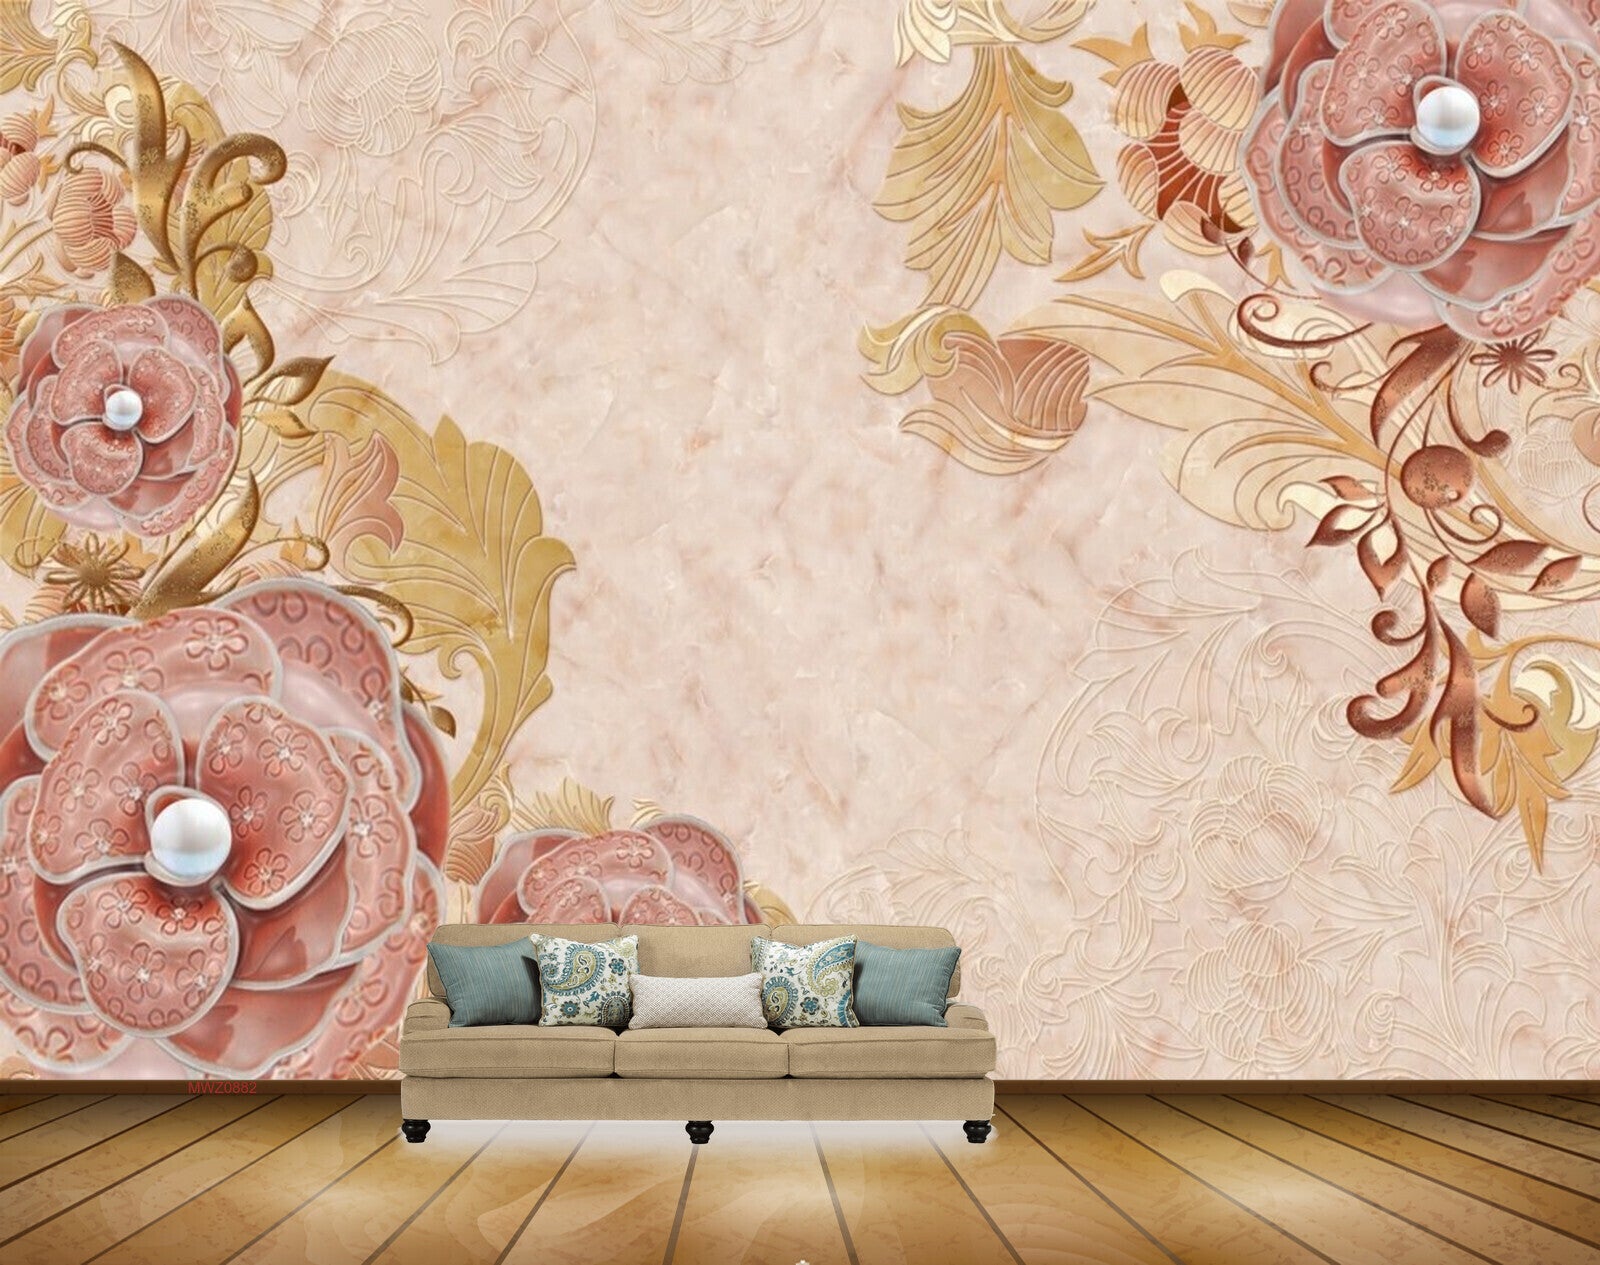 Damask Floral Pattern Royal Wallpaper Illustration Stock Illustration  397163758  Shutterstock